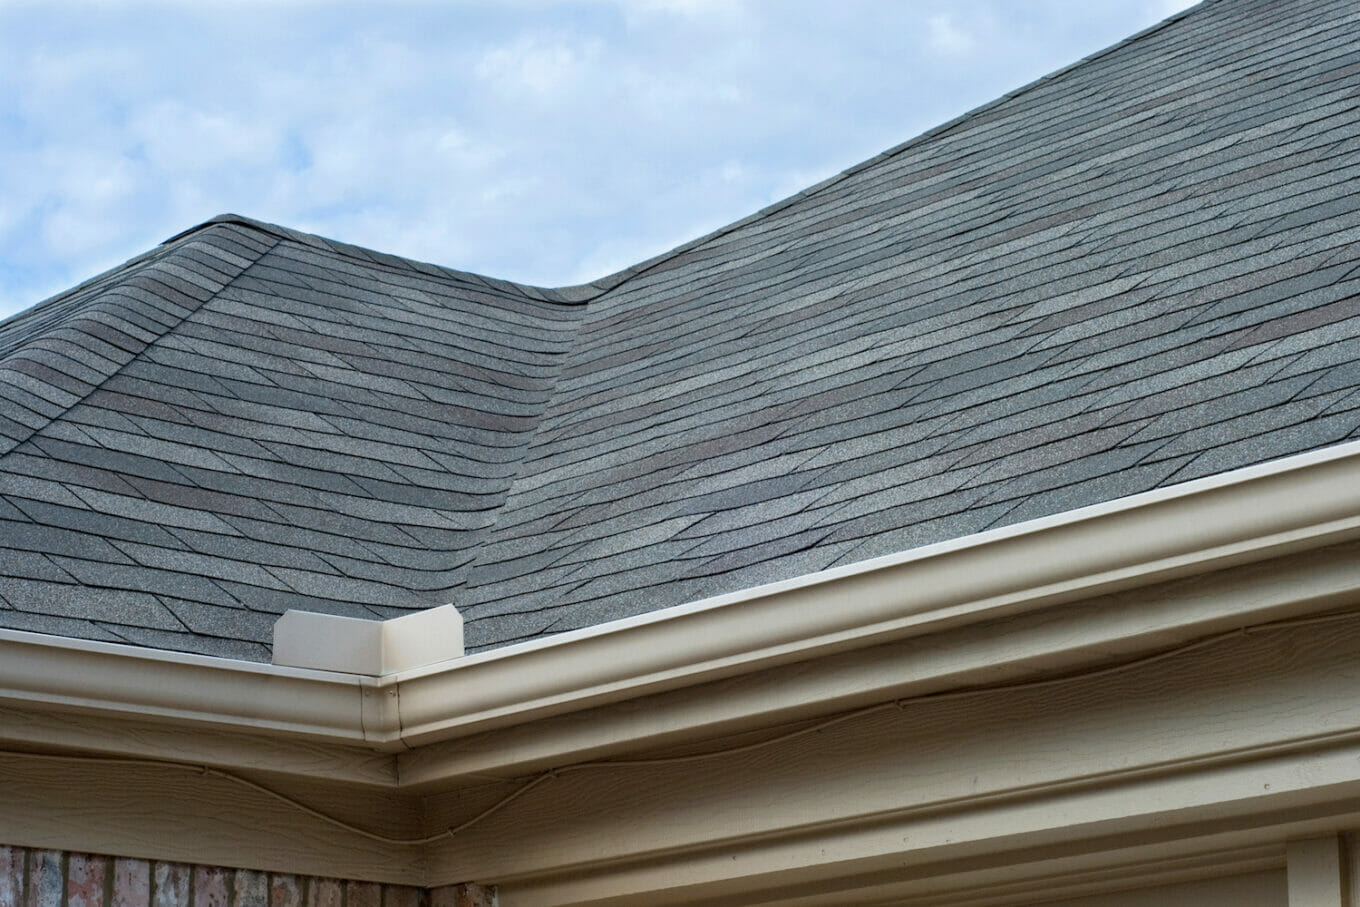 davinci roof cost composite tiles